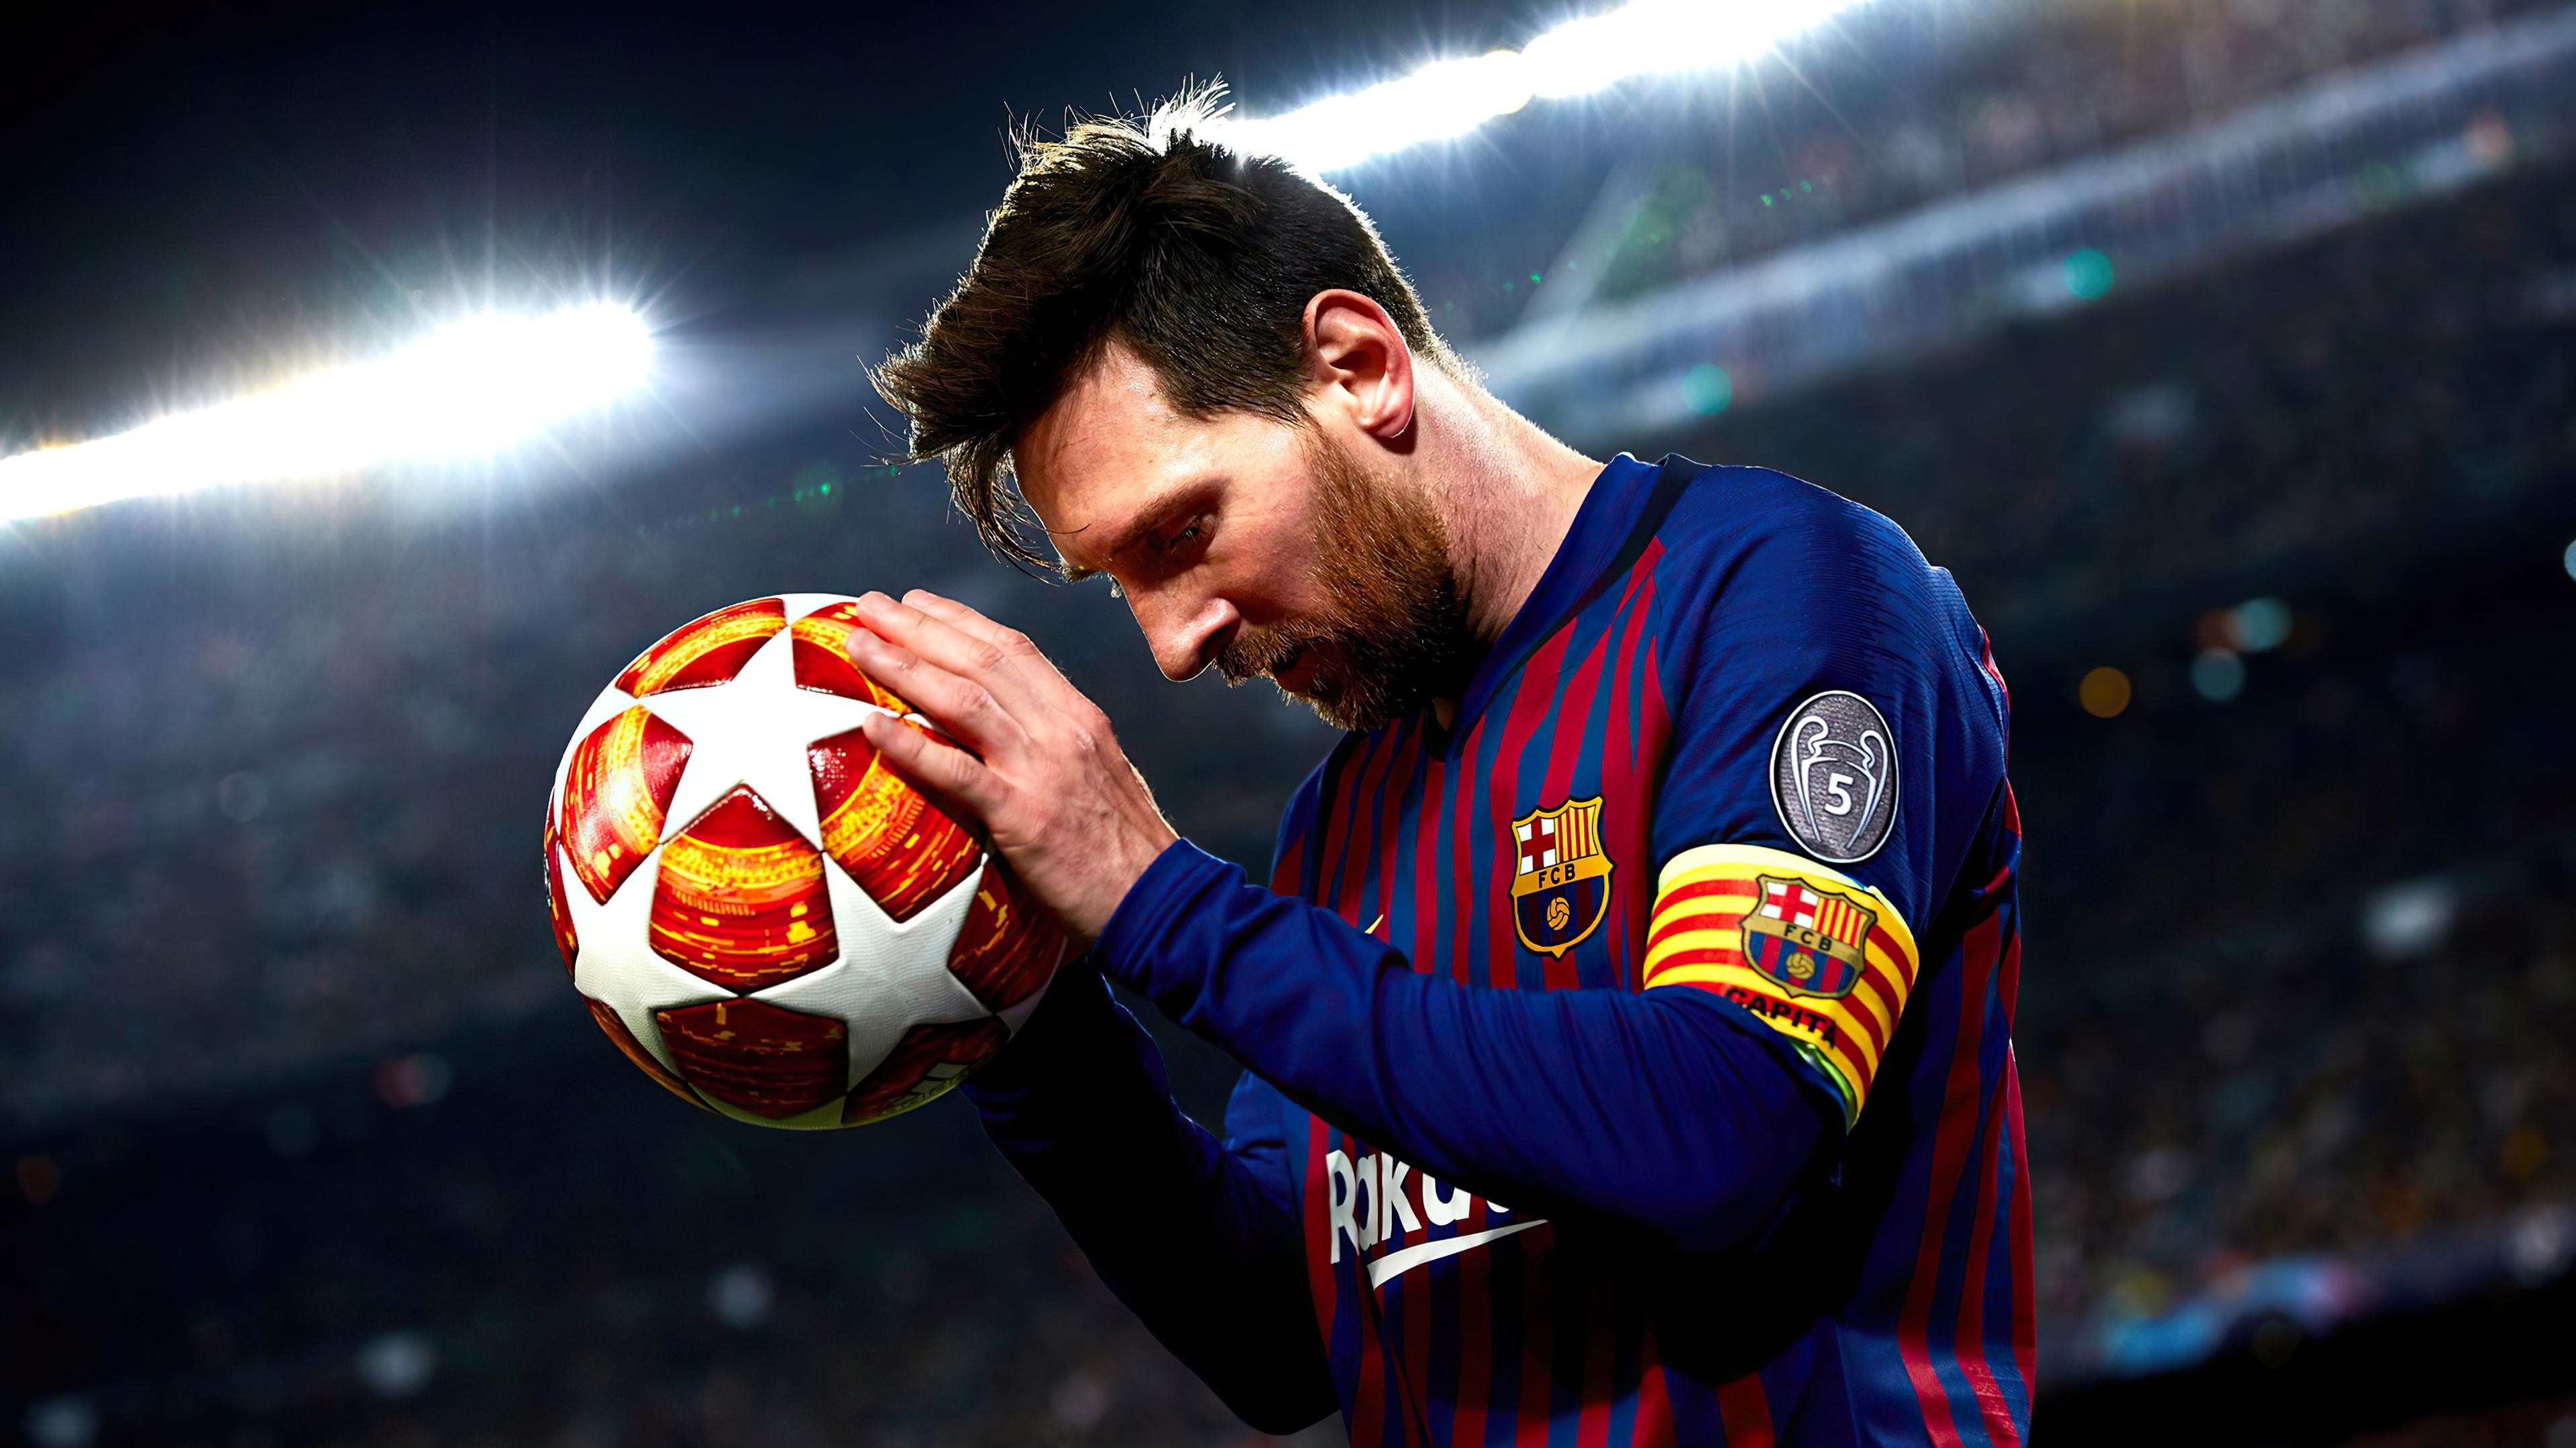 Lionel Messi HD Sports 4k Wallpaper Image Background